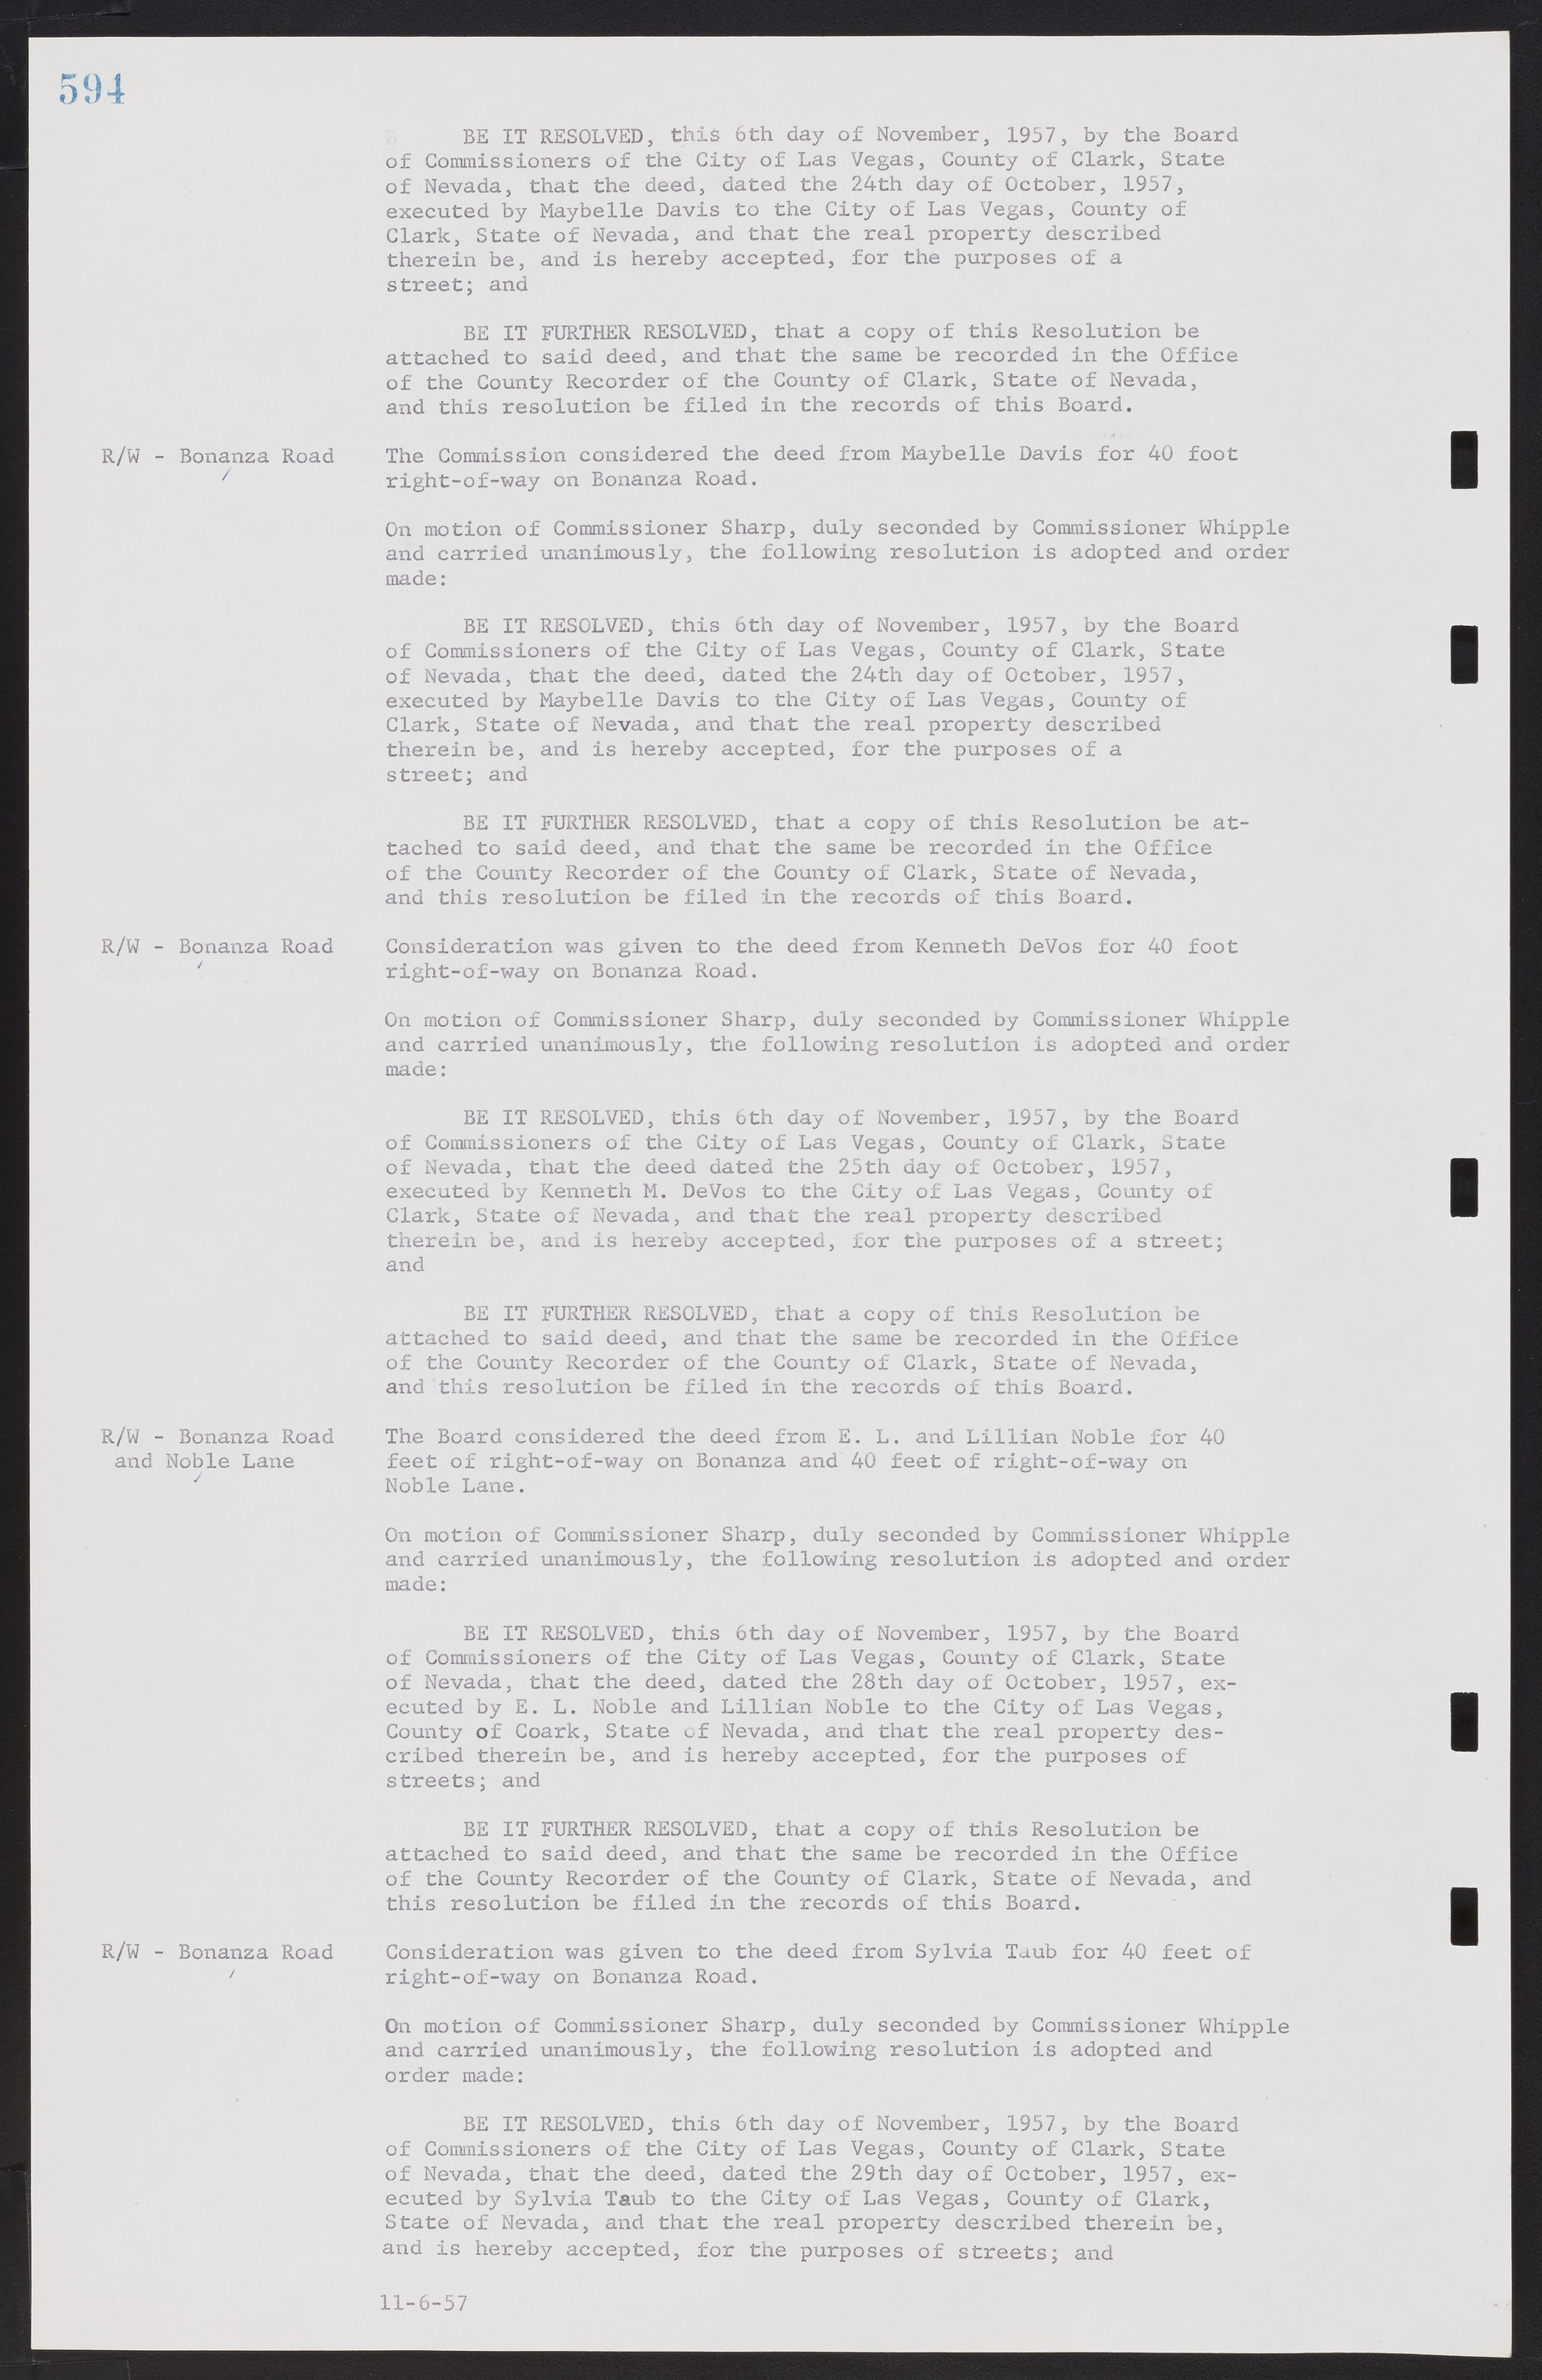 Las Vegas City Commission Minutes, September 21, 1955 to November 20, 1957, lvc000010-614